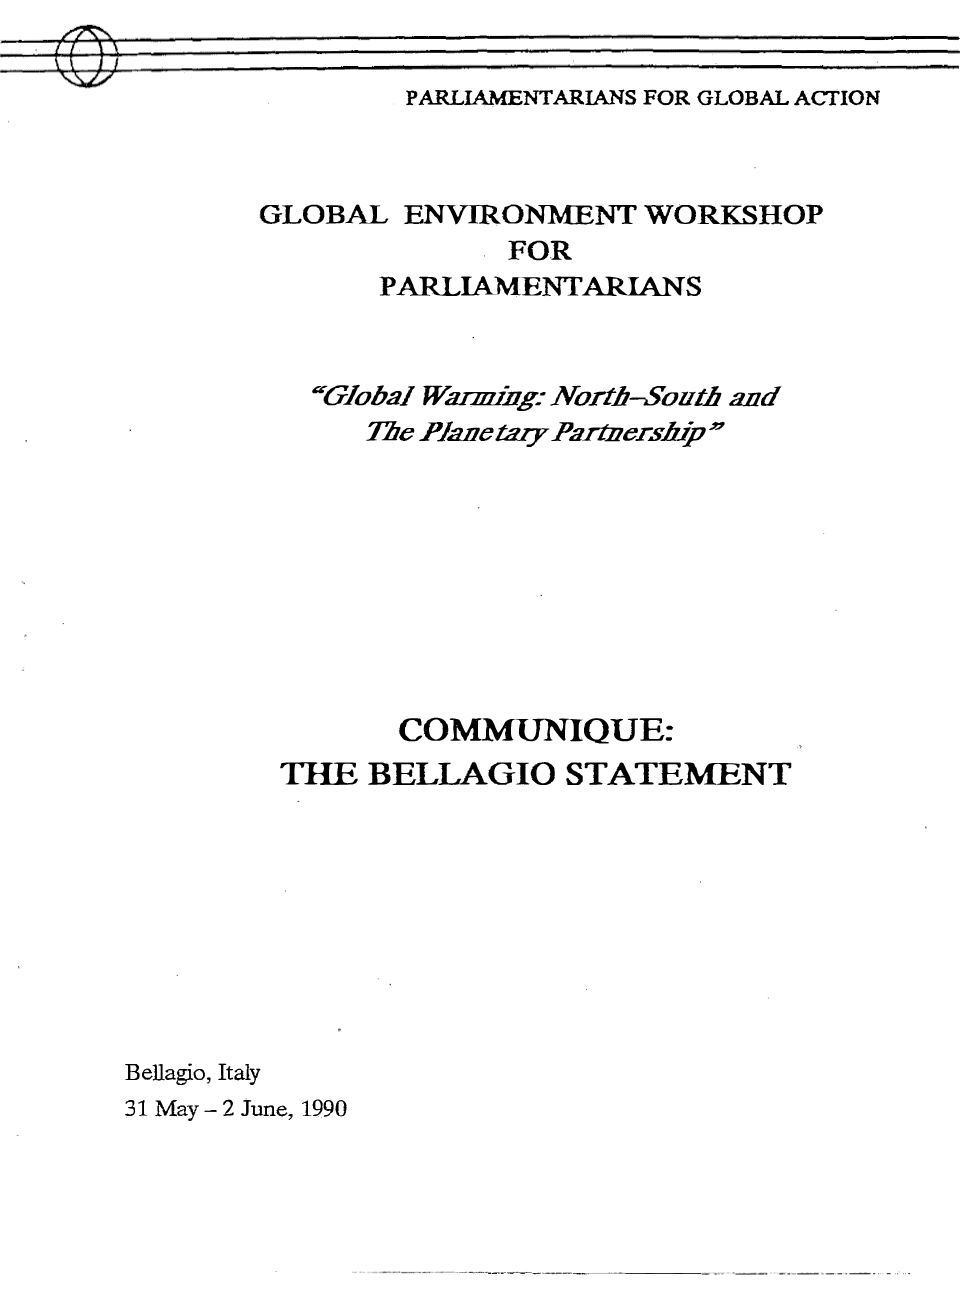 Bellagio Communiqué on Climate Change (1990)